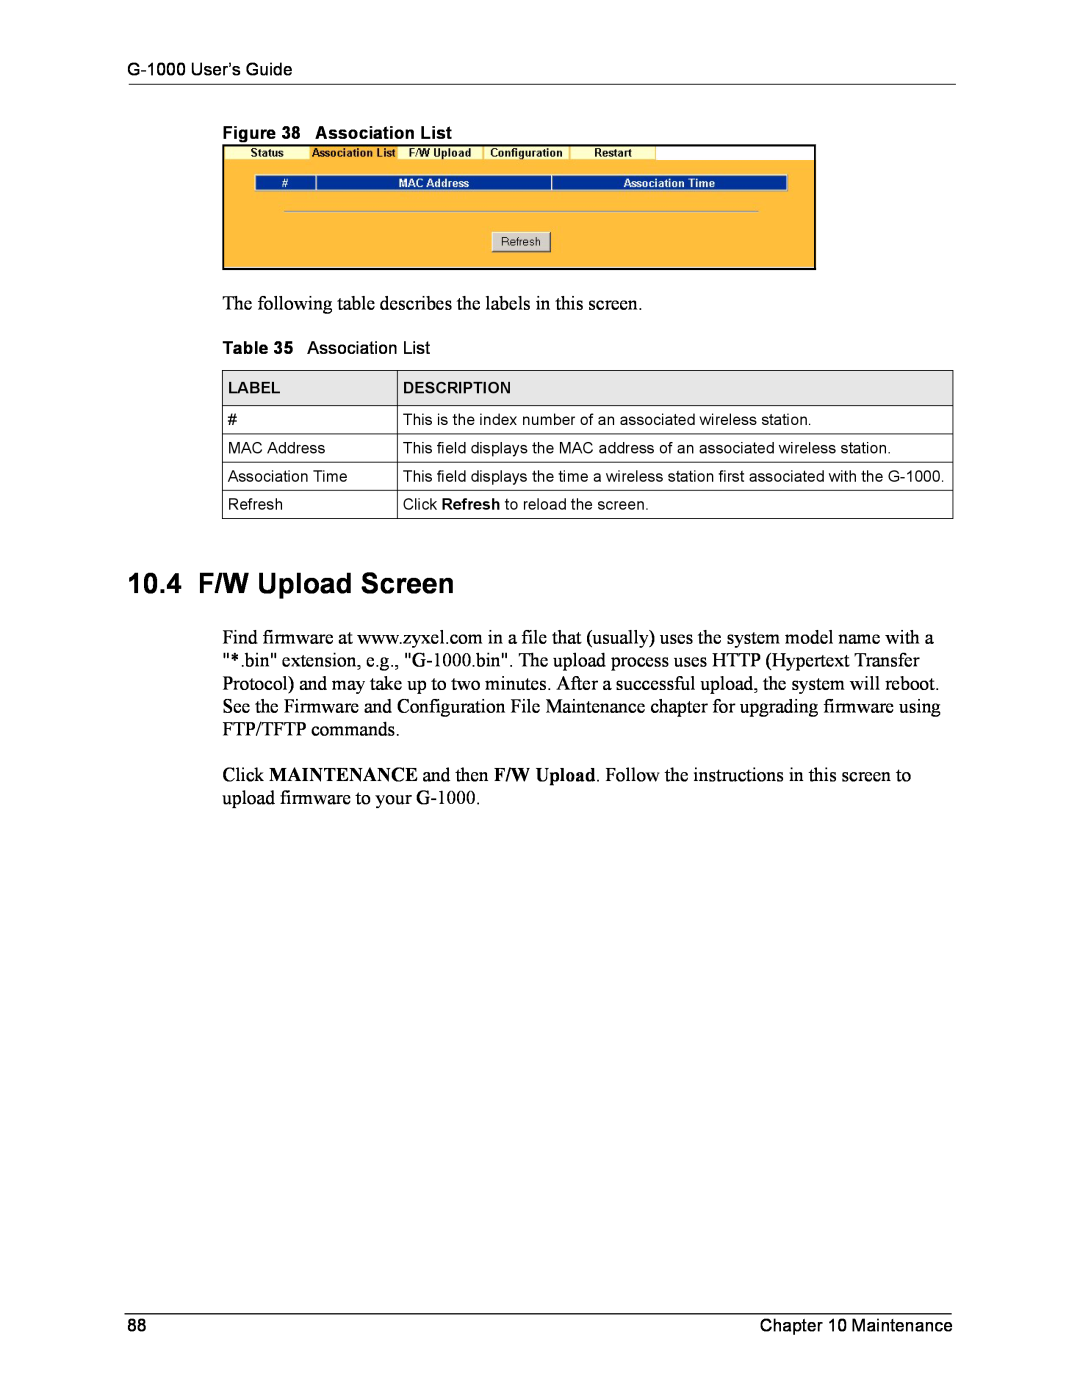 ZyXEL Communications 10.4 F/W Upload Screen, G-1000 User’s Guide, Association List, Maintenance, Label, Description 